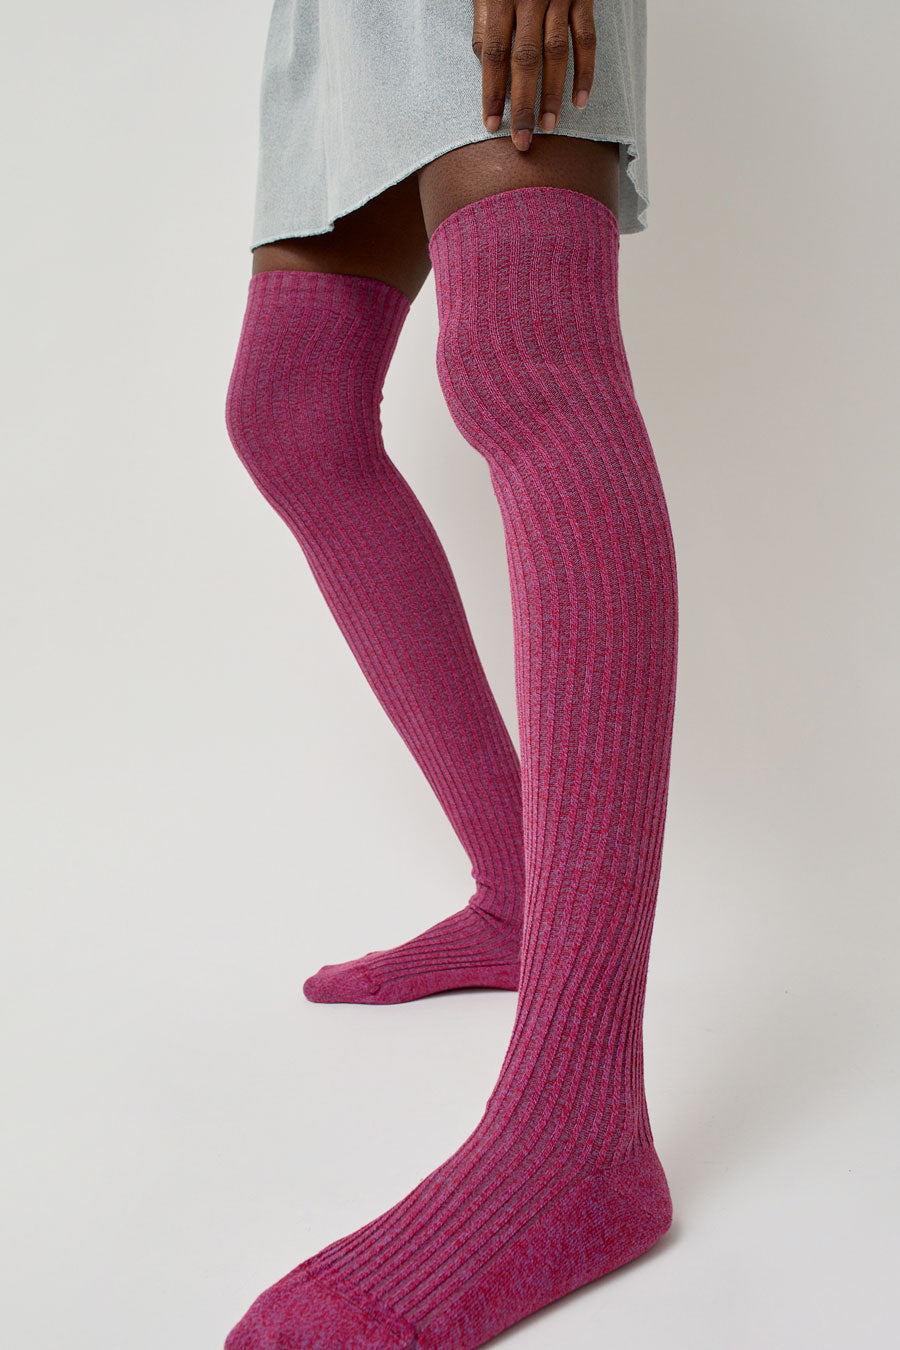 Baserange Overknee Socks in Yu Purple and Team Red